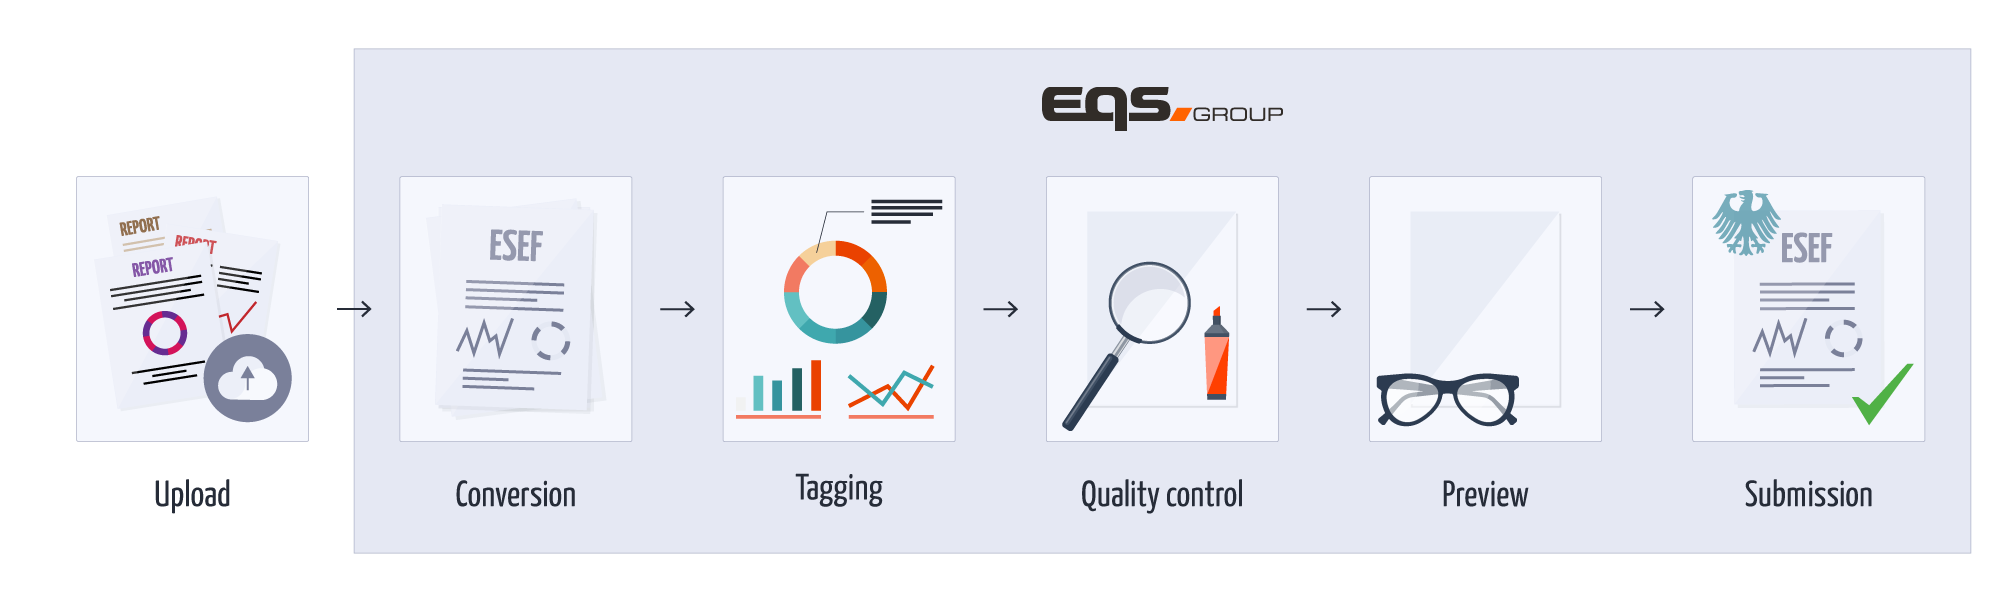 ESEF Service workflow | EQS Group